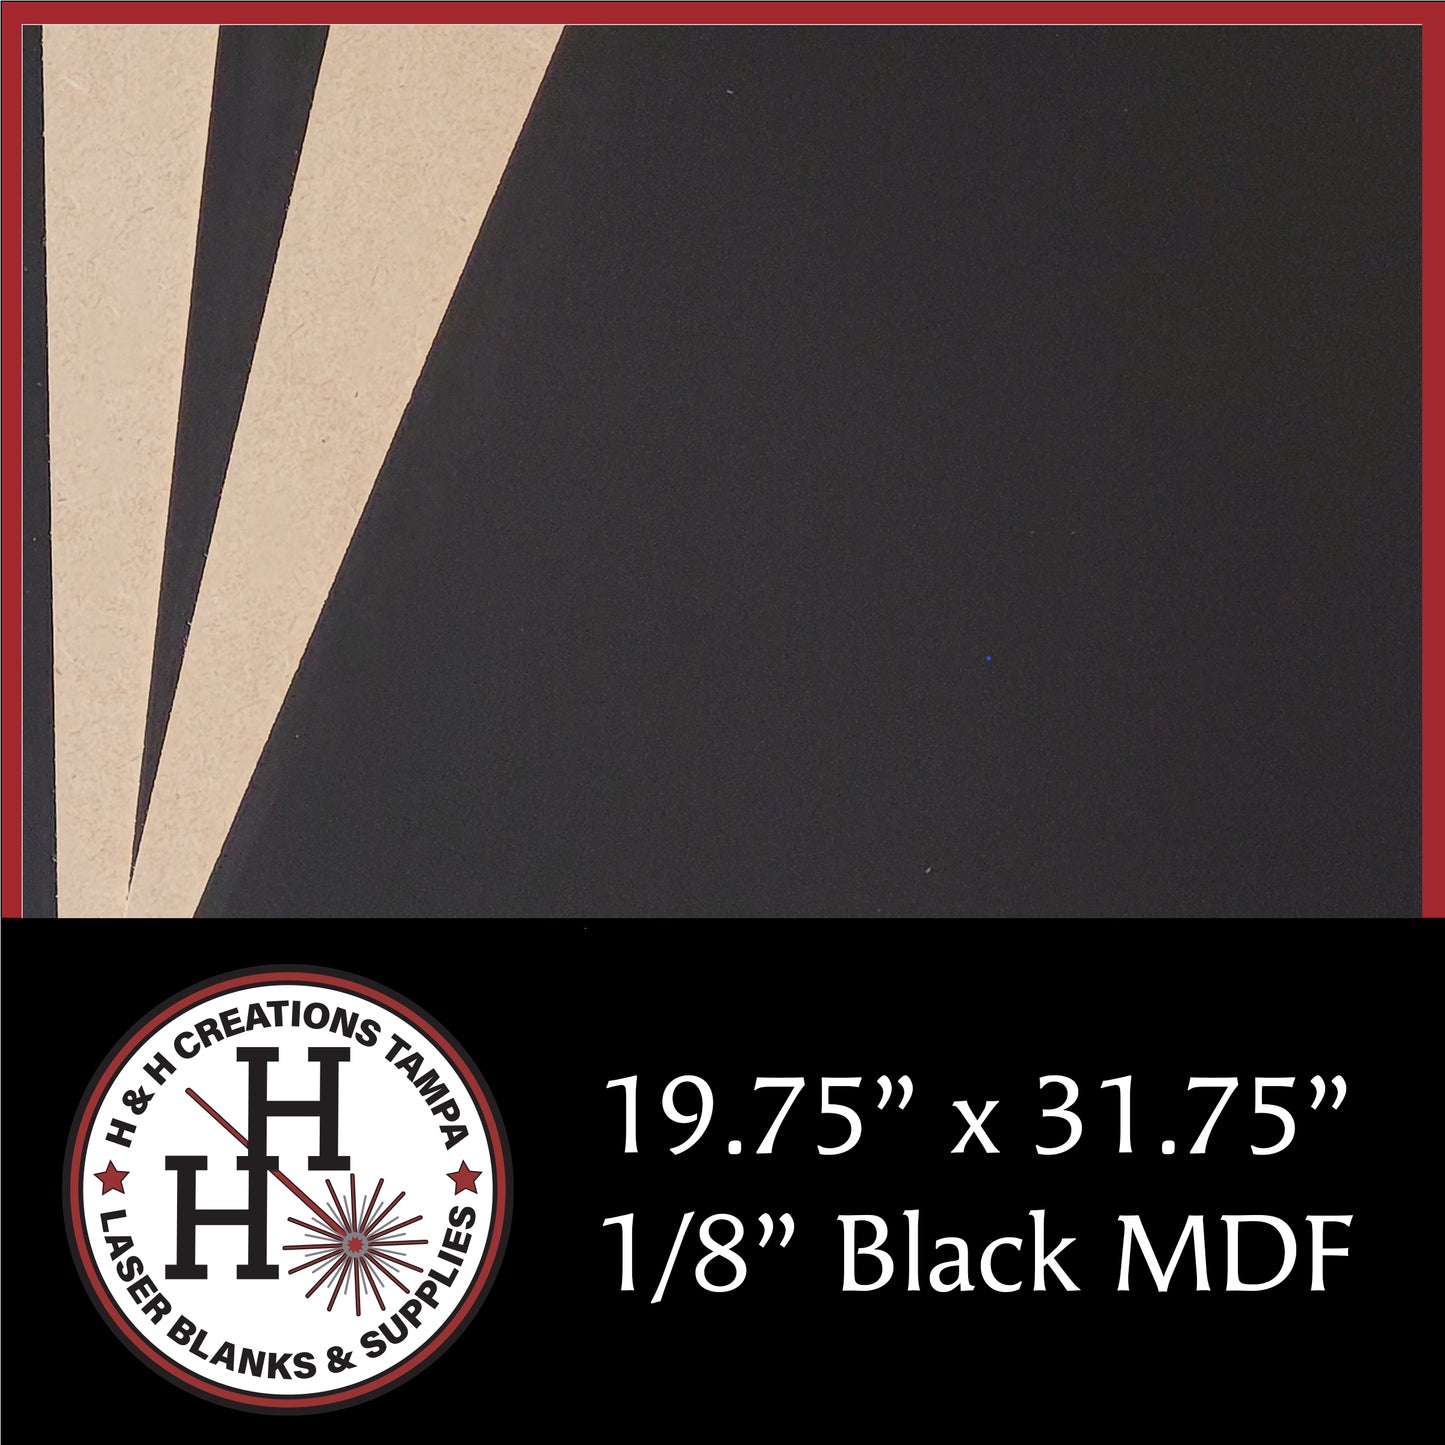 1/8" Premium Black Single-Sided MDF Draft Board 19.75" x 31.75"